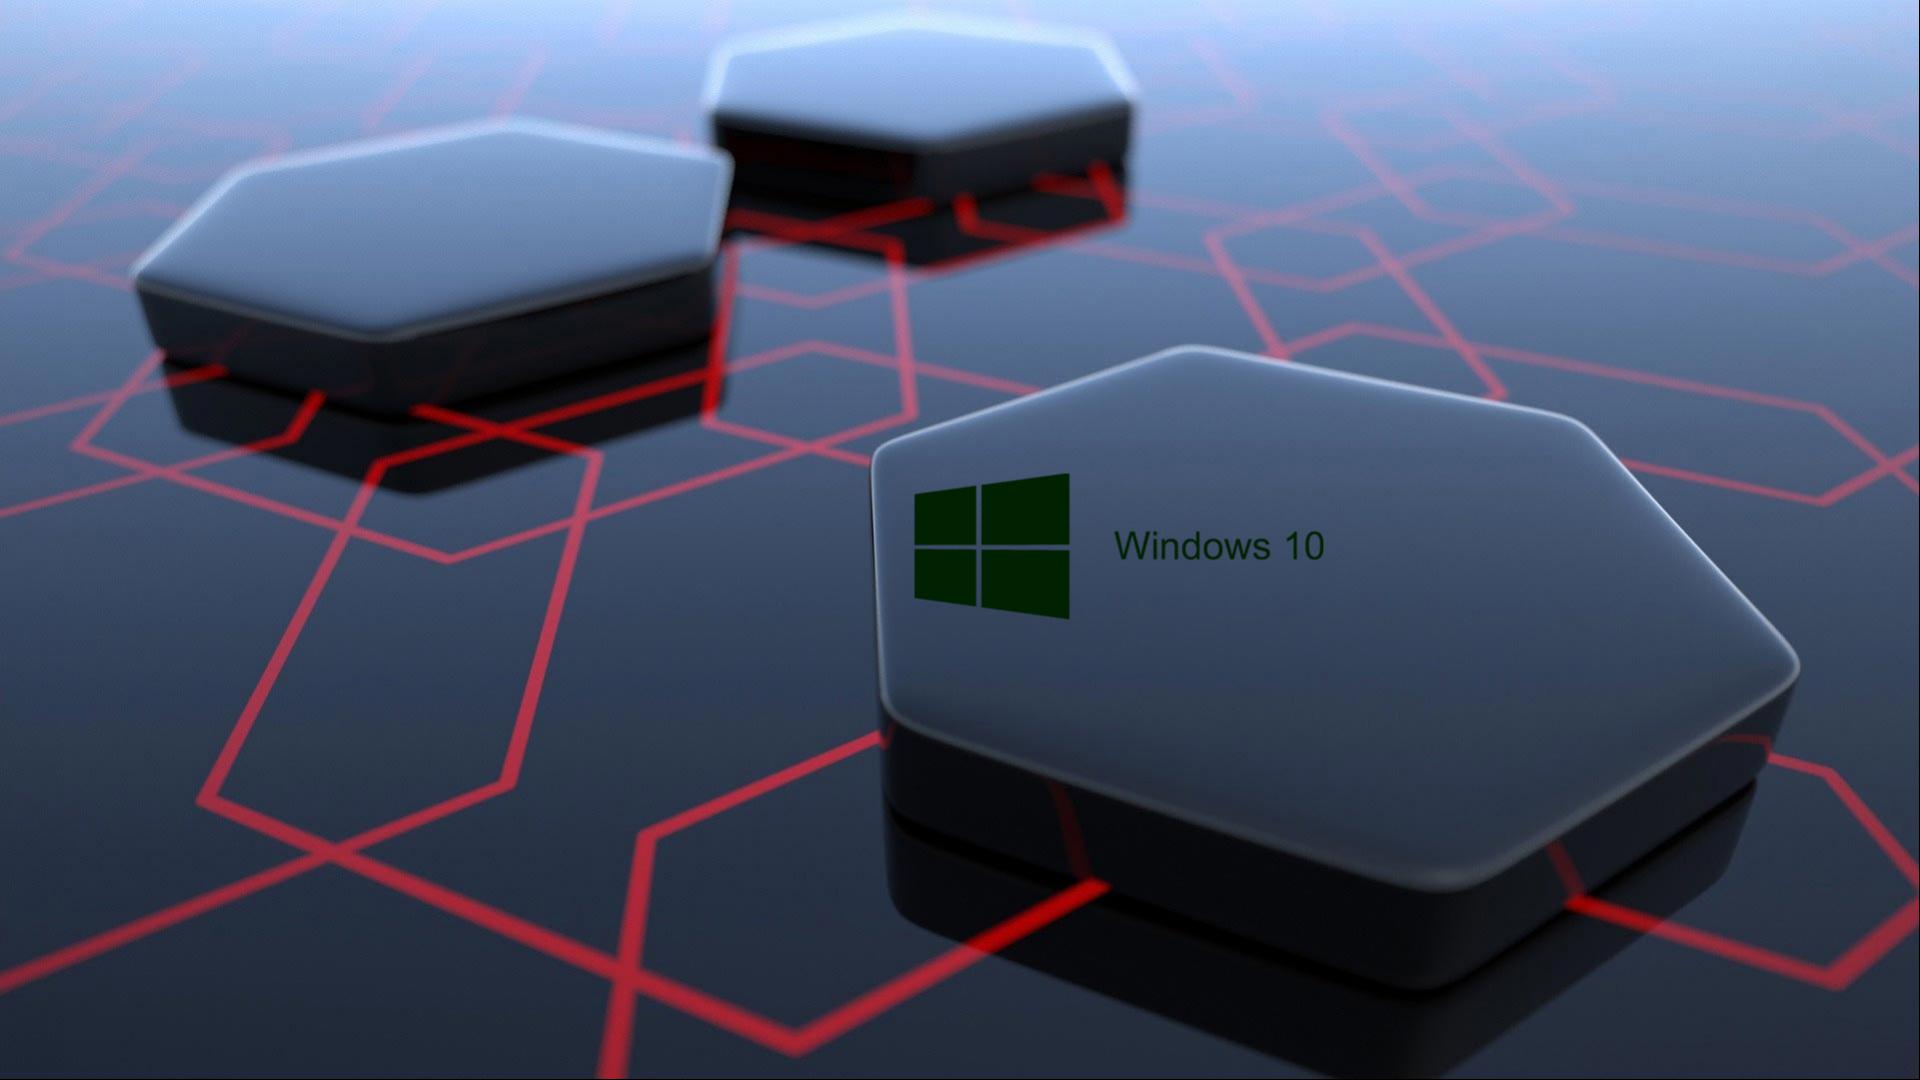 Windows 10 Desktop Image with 3d Art Black Hexagonal Wallpapers HD 1920x1080